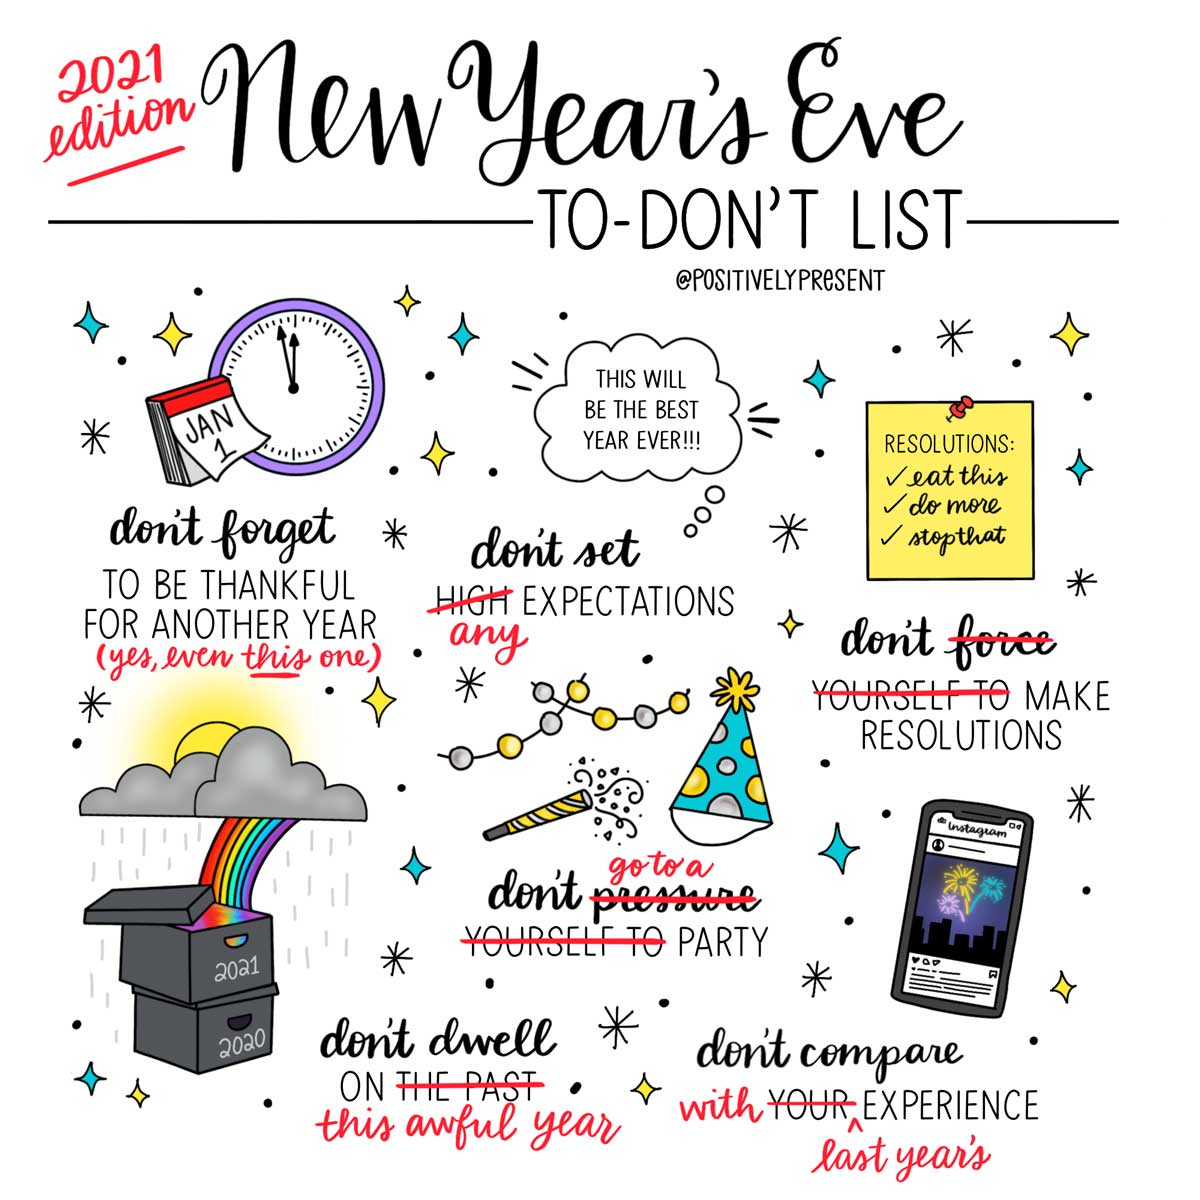 News Year’s Eve don't list illustration.